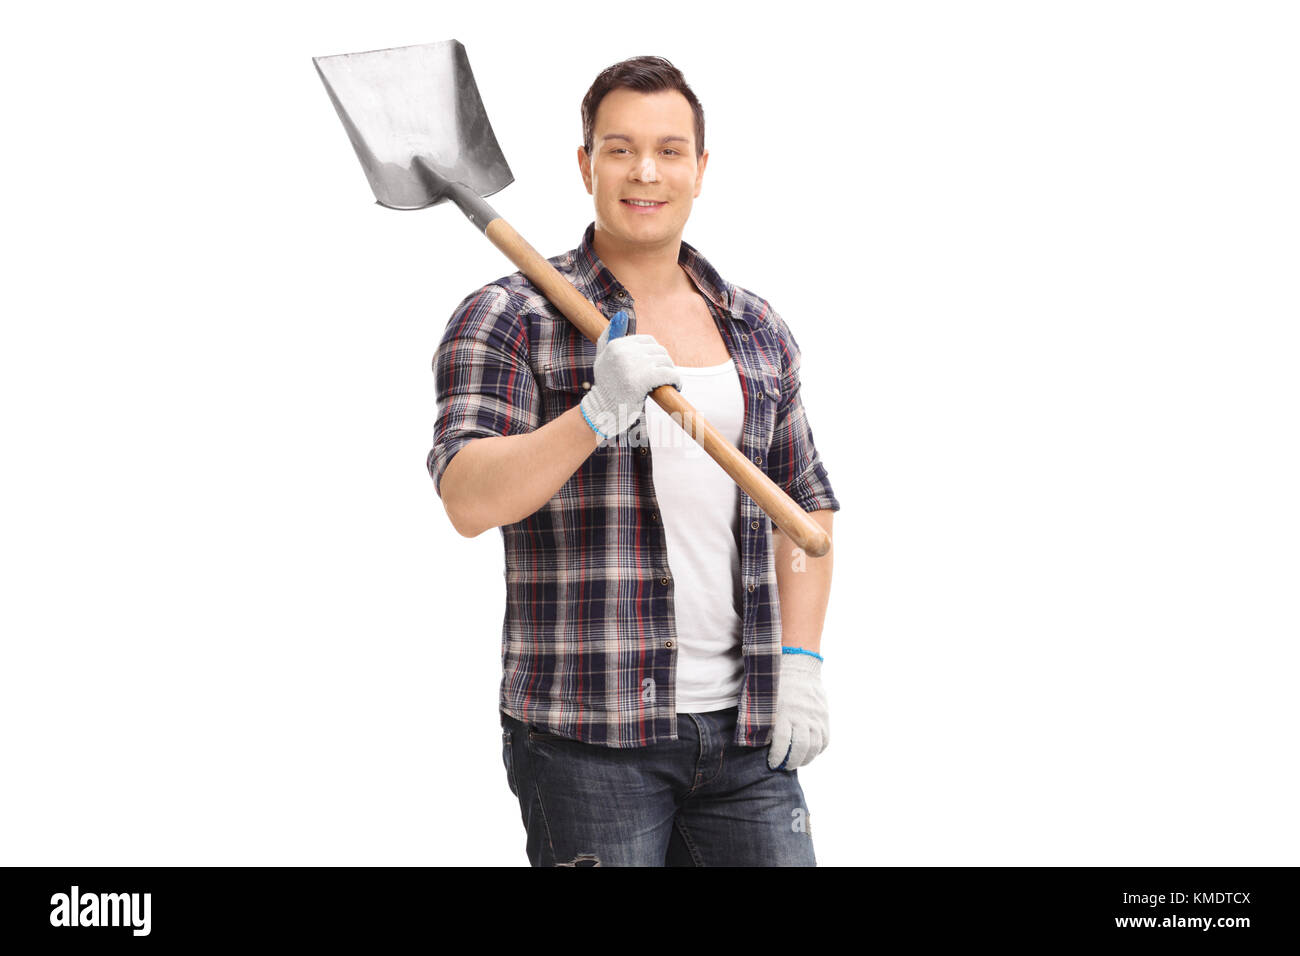 Gardener with a shovel isolated on white background Stock Photo